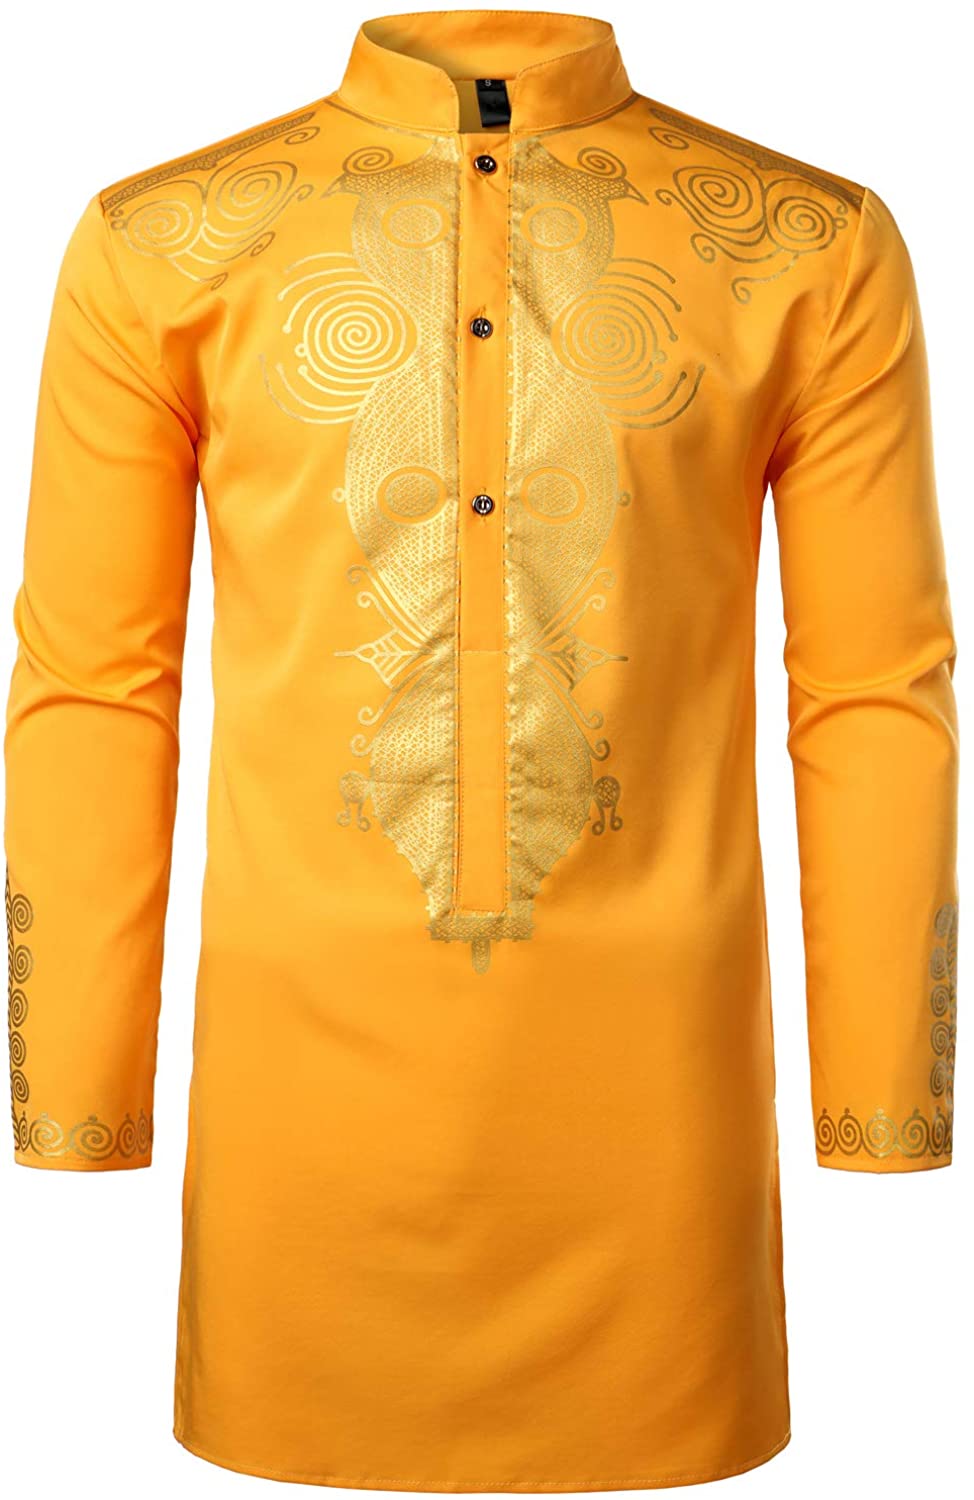 LucMatton Men's Traditional African Dashiki Luxury Metallic Gold Printed Shirt 